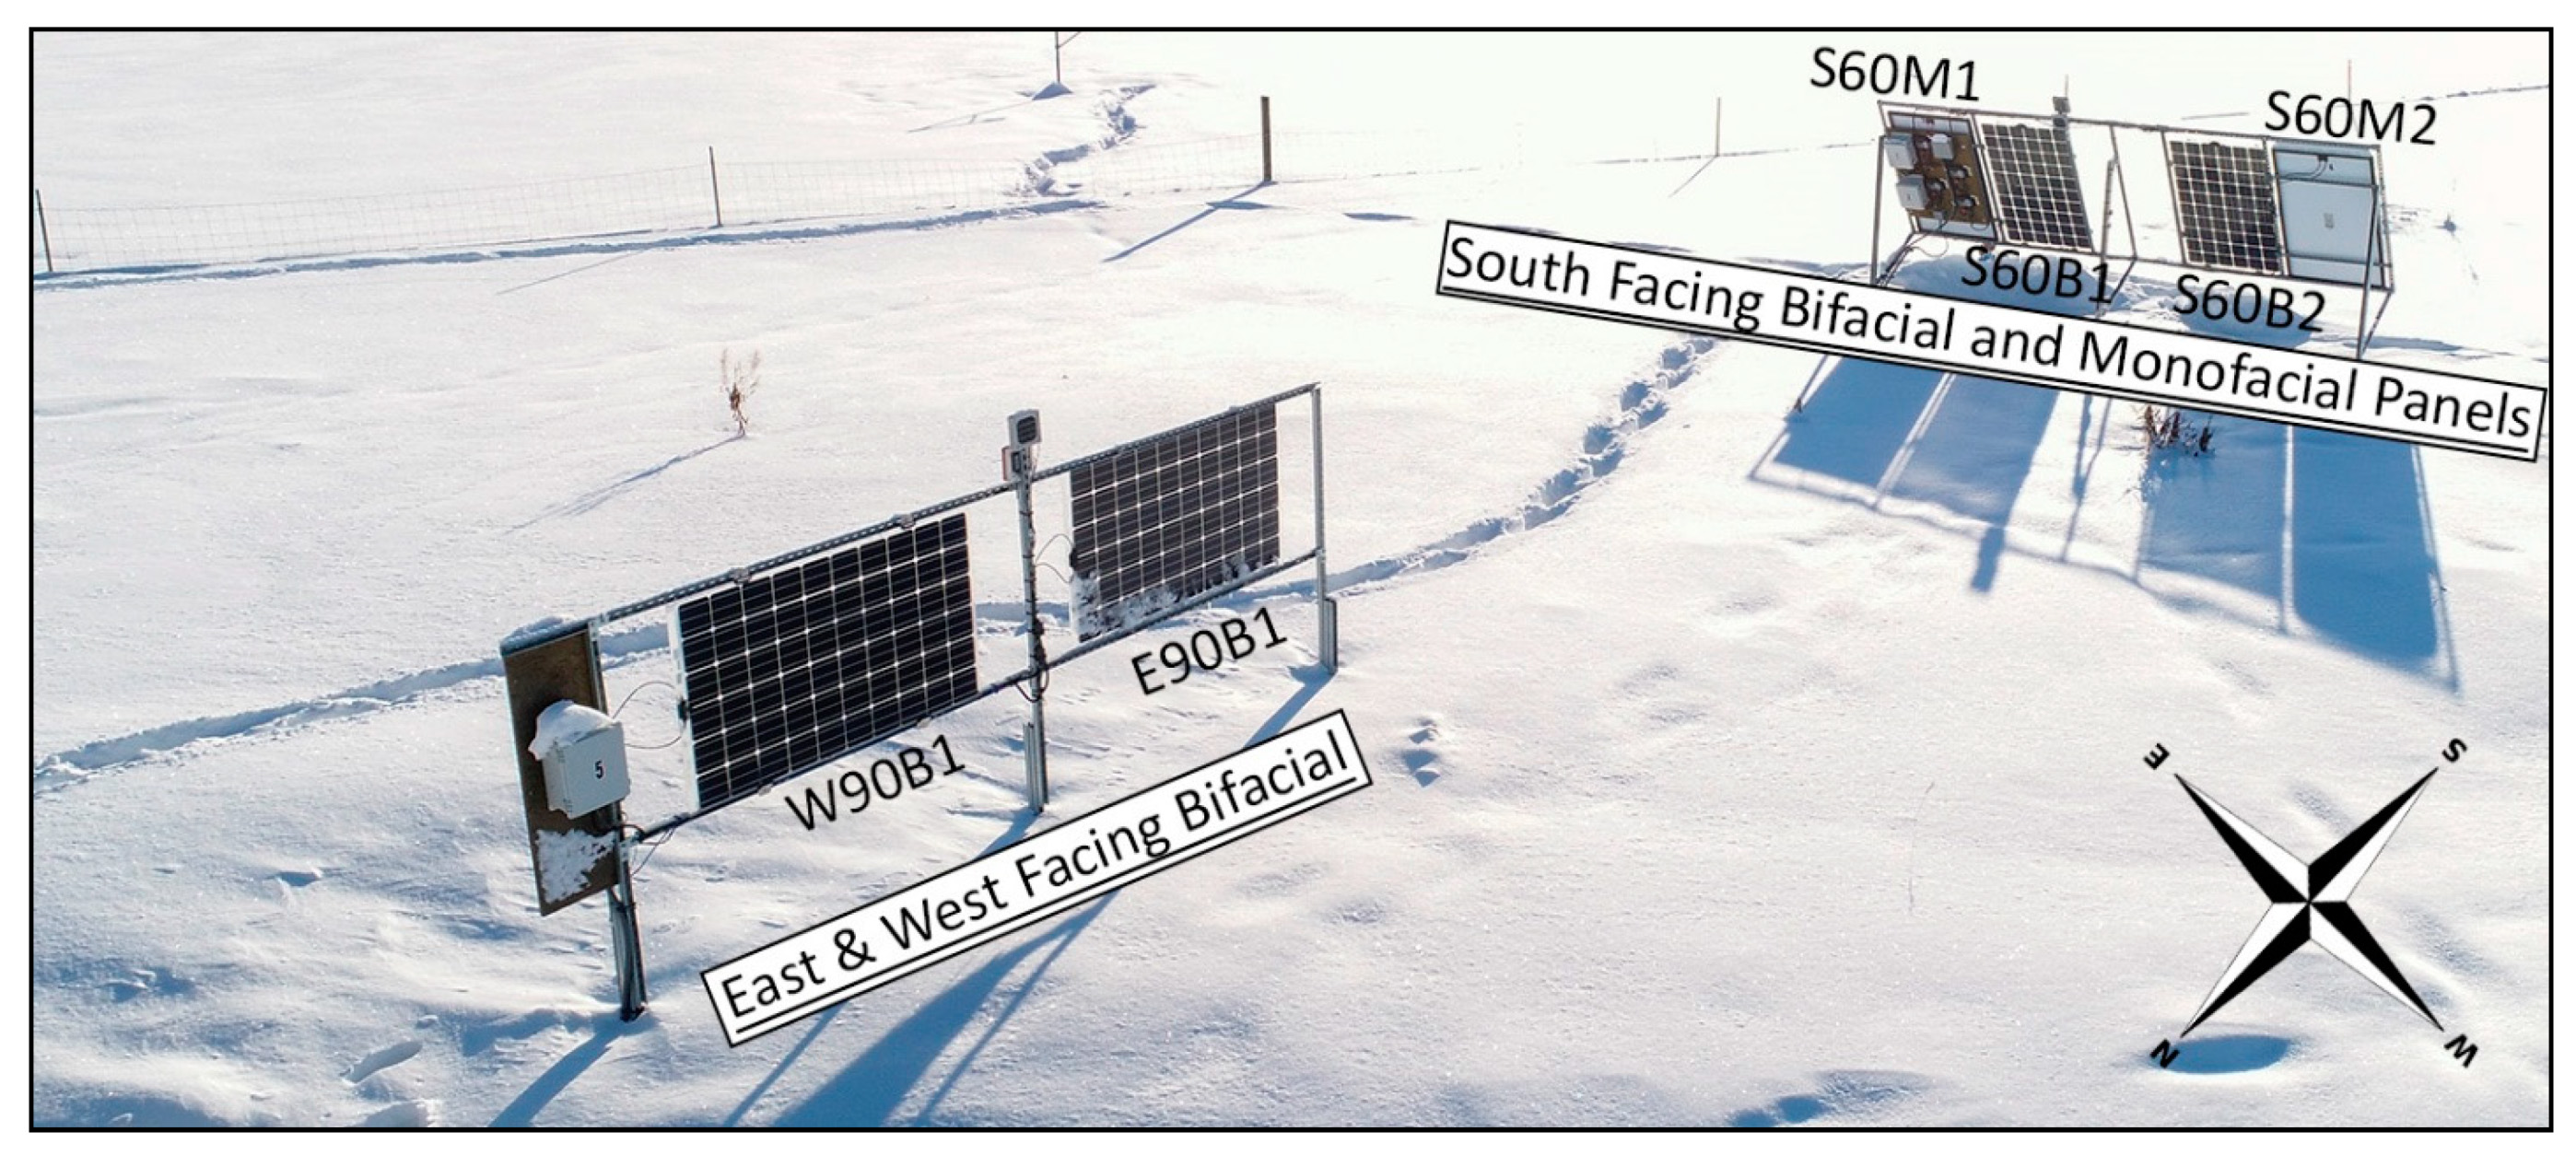 Bifacial Solar Panels Performance in Alaska Revealed